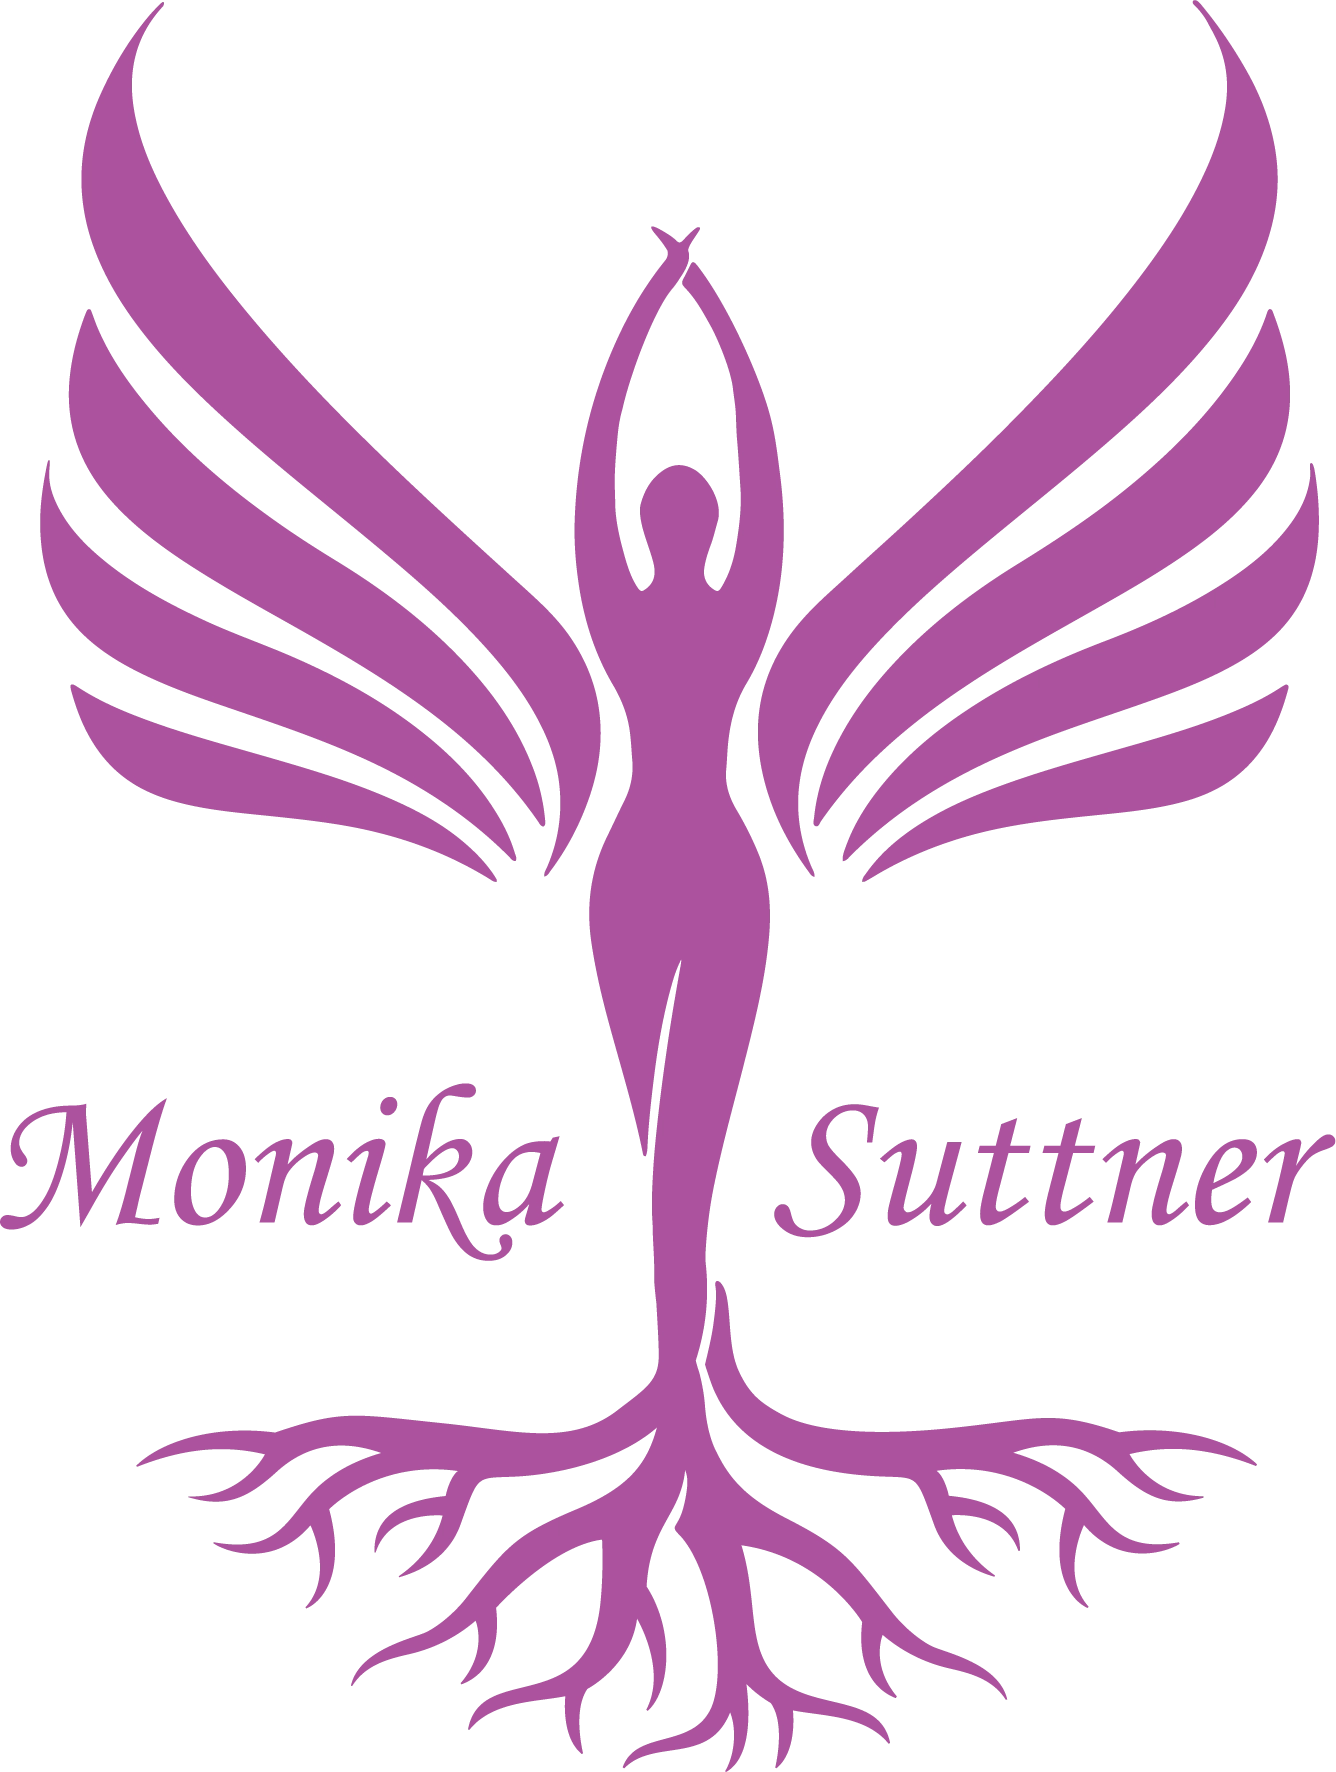 Monika Suttner